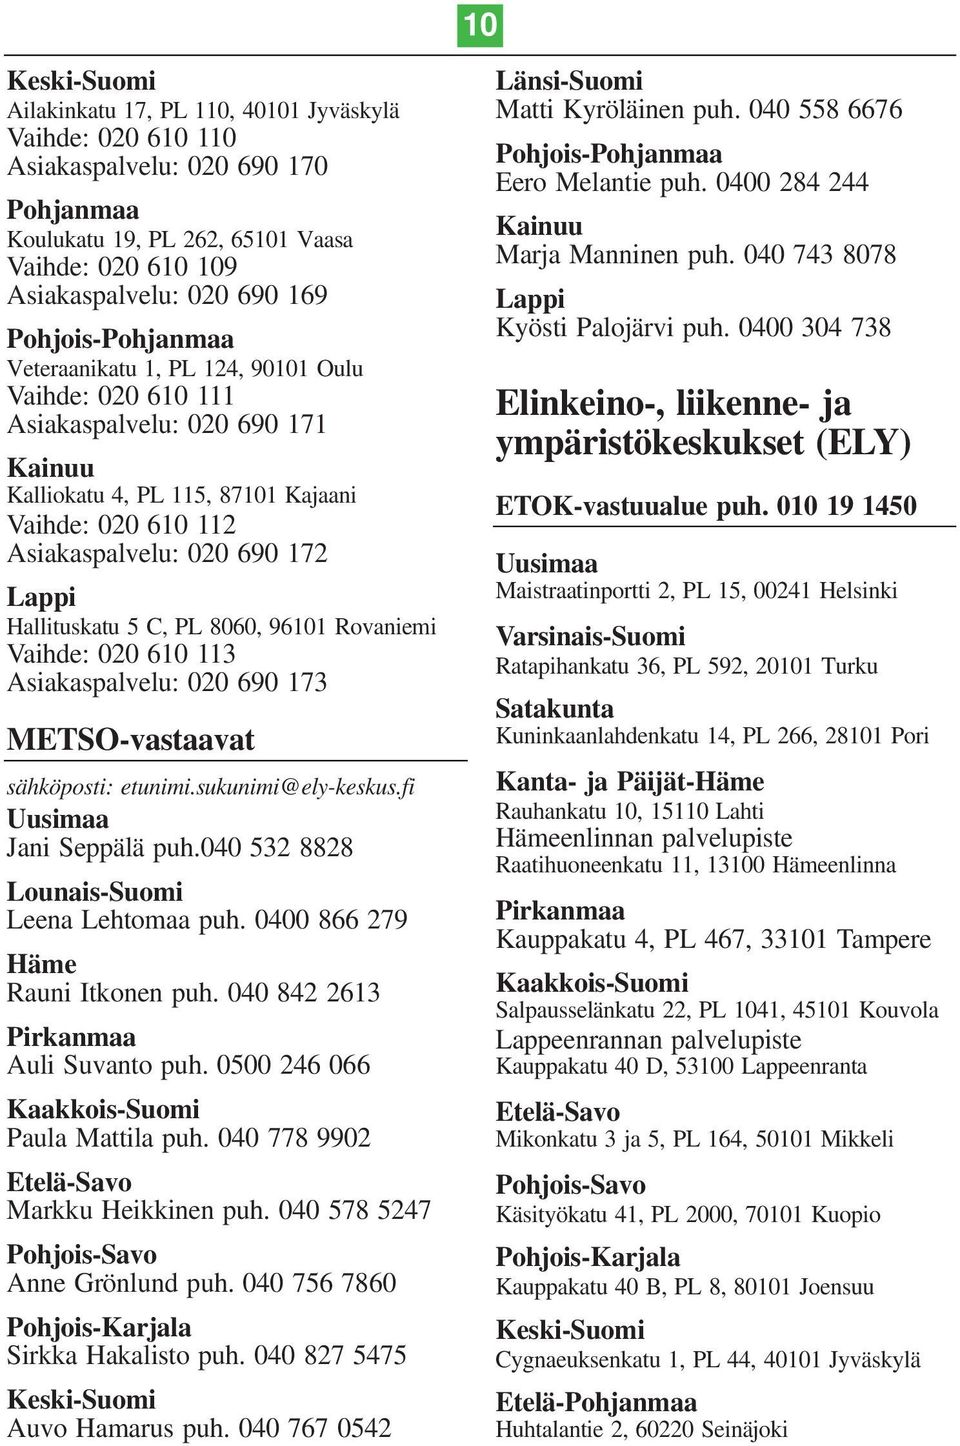 Hallituskatu 5 C, PL 8060, 96101 Rovaniemi Vaihde: 020 610 113 Asiakaspalvelu: 020 690 173 METSO-vastaavat sähköposti: etunimi.sukunimi@ely-keskus.fi Uusimaa Jani Seppälä puh.